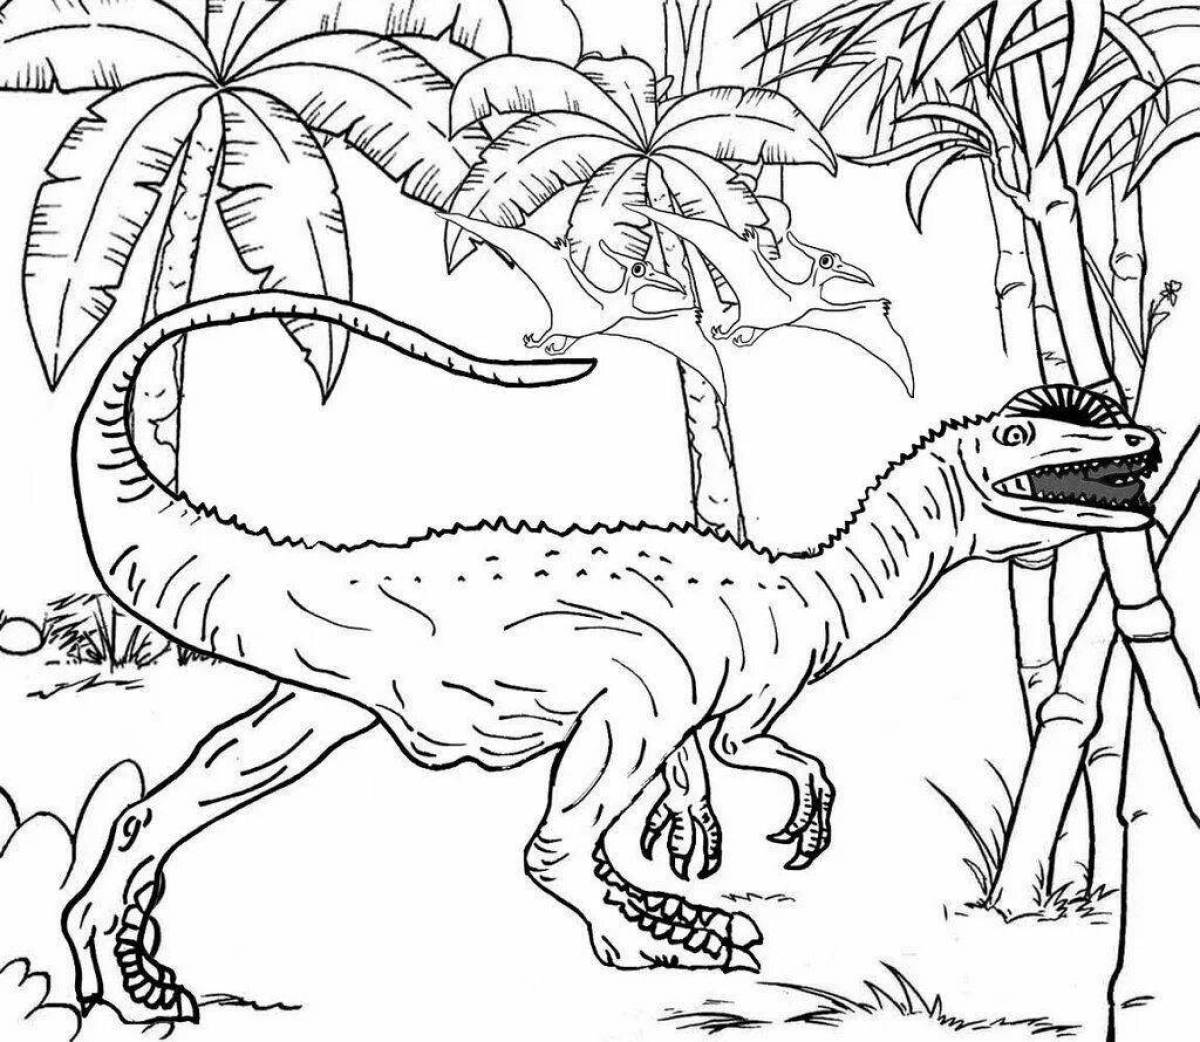 Coloring page elegant dilophosaurus